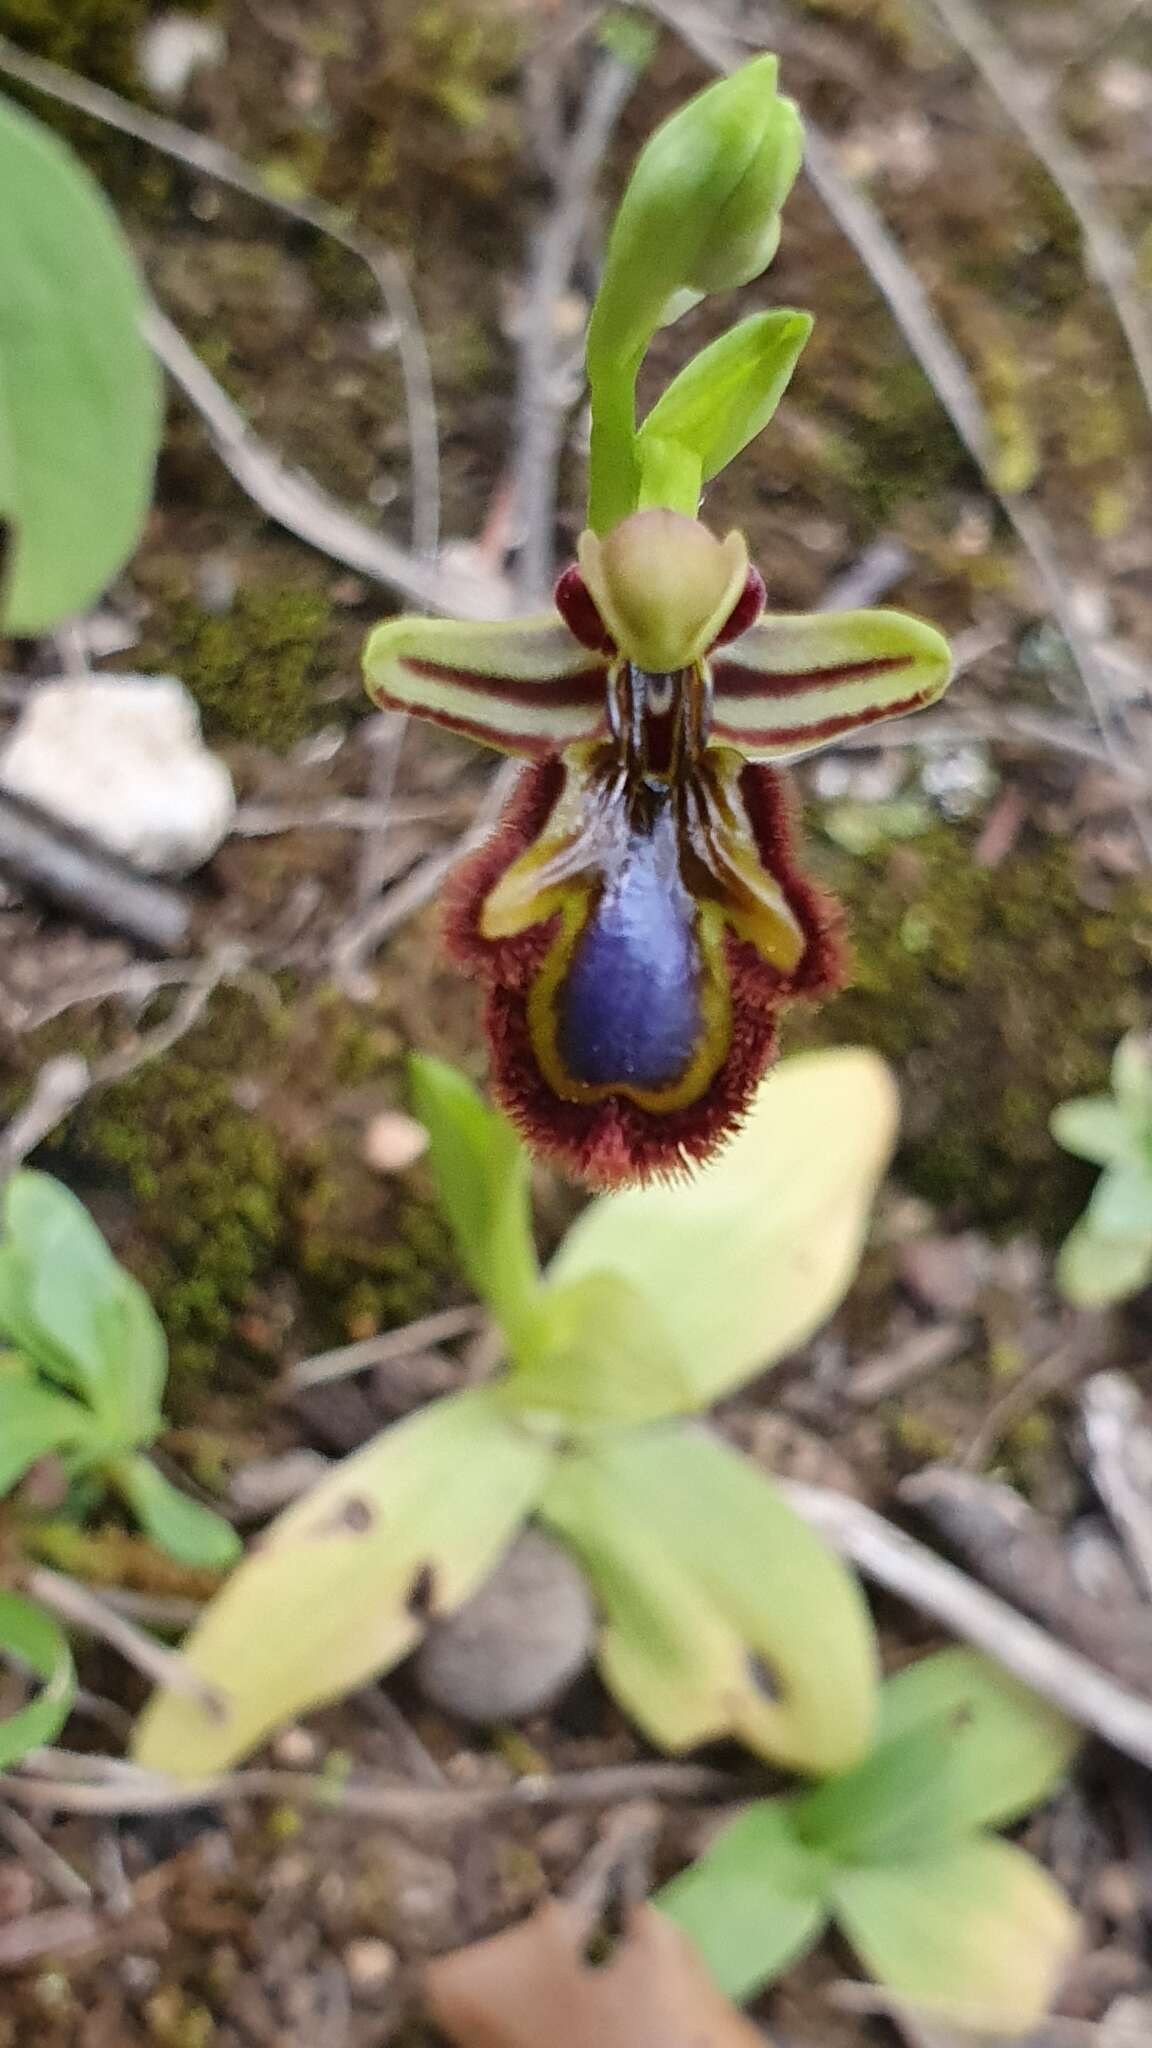 Image of Ophrys speculum subsp. speculum